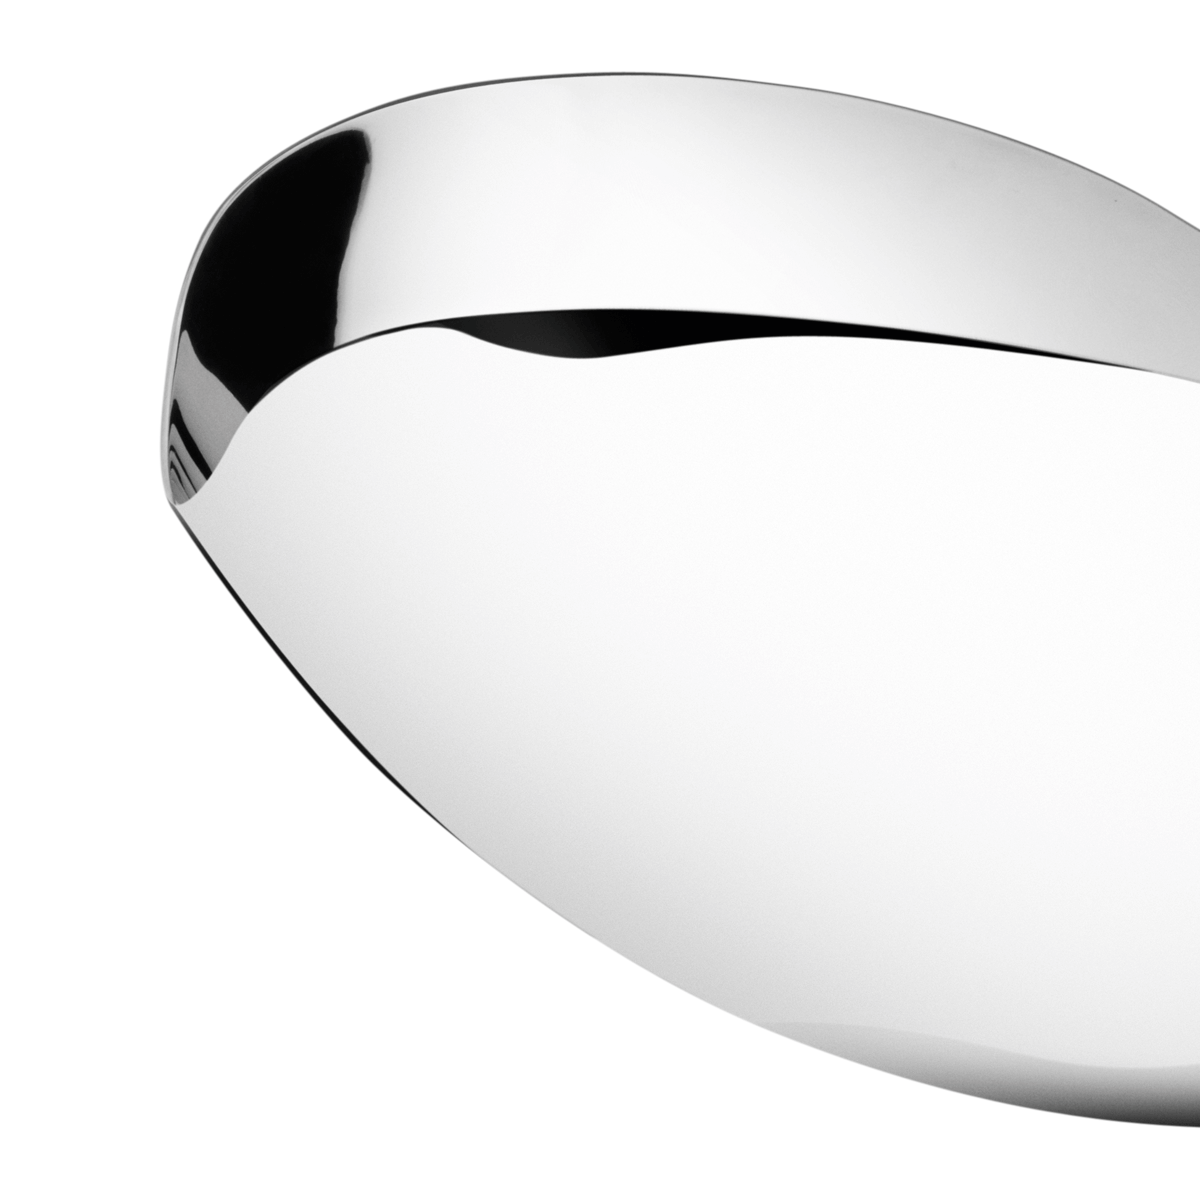 georg jensen bloom bowl stainless steel mirror finish small 260mm 3586280Tsbp